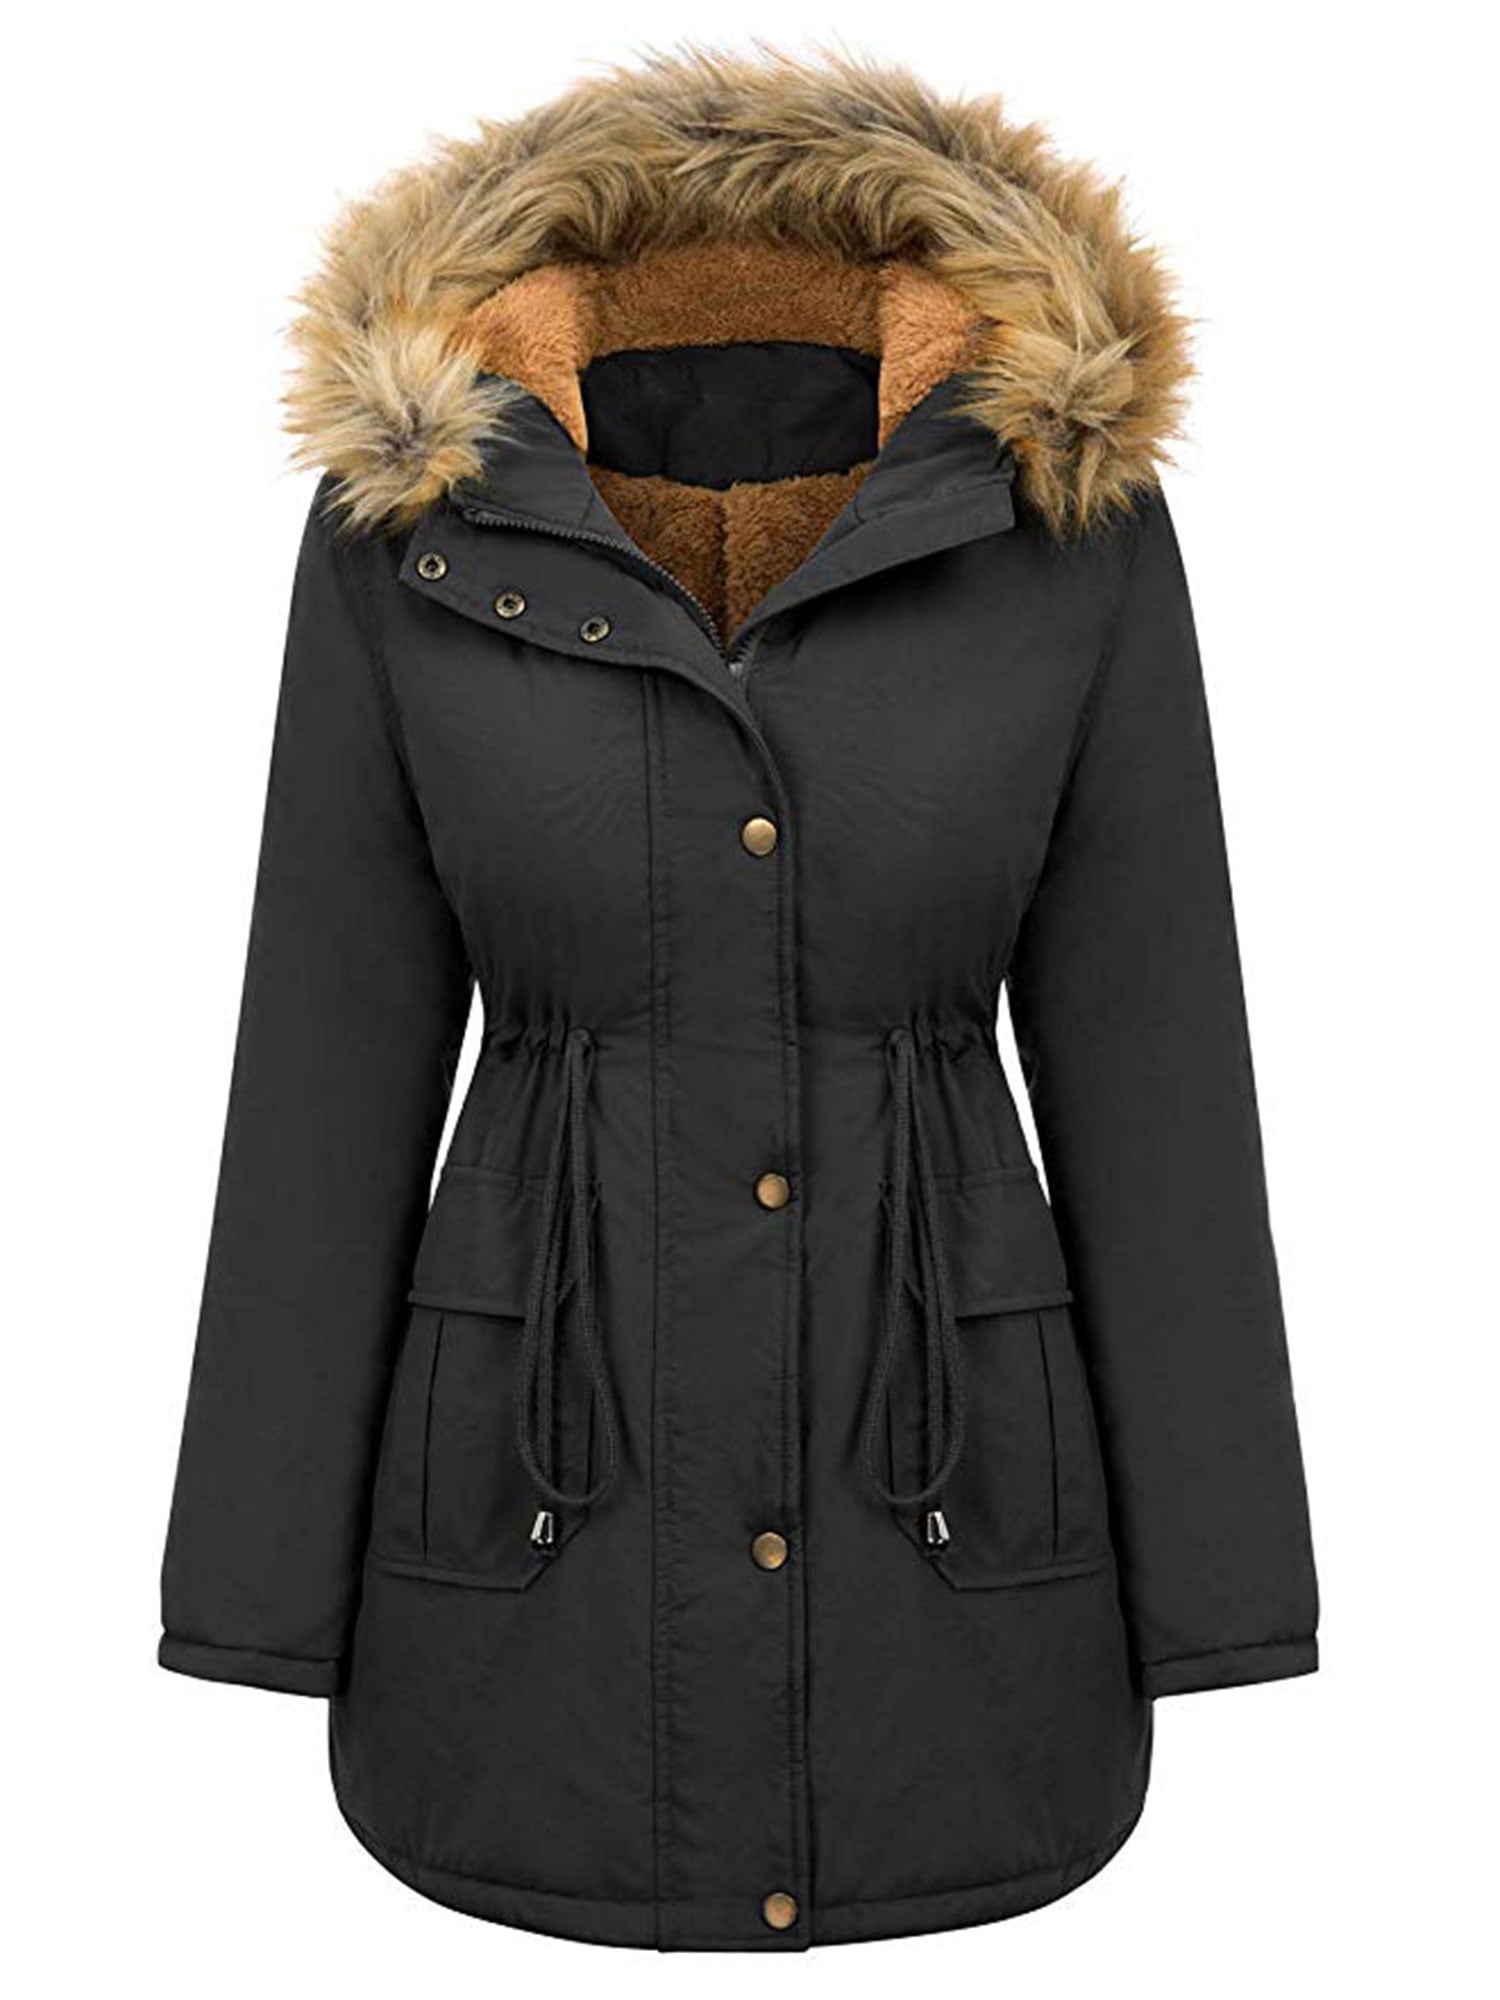 Women Parkas Winter Coat Hessimy Womens Hooded Warm Winter Coats with Fleece Lined Outwear Jacket Overcoat Mid Length Black 